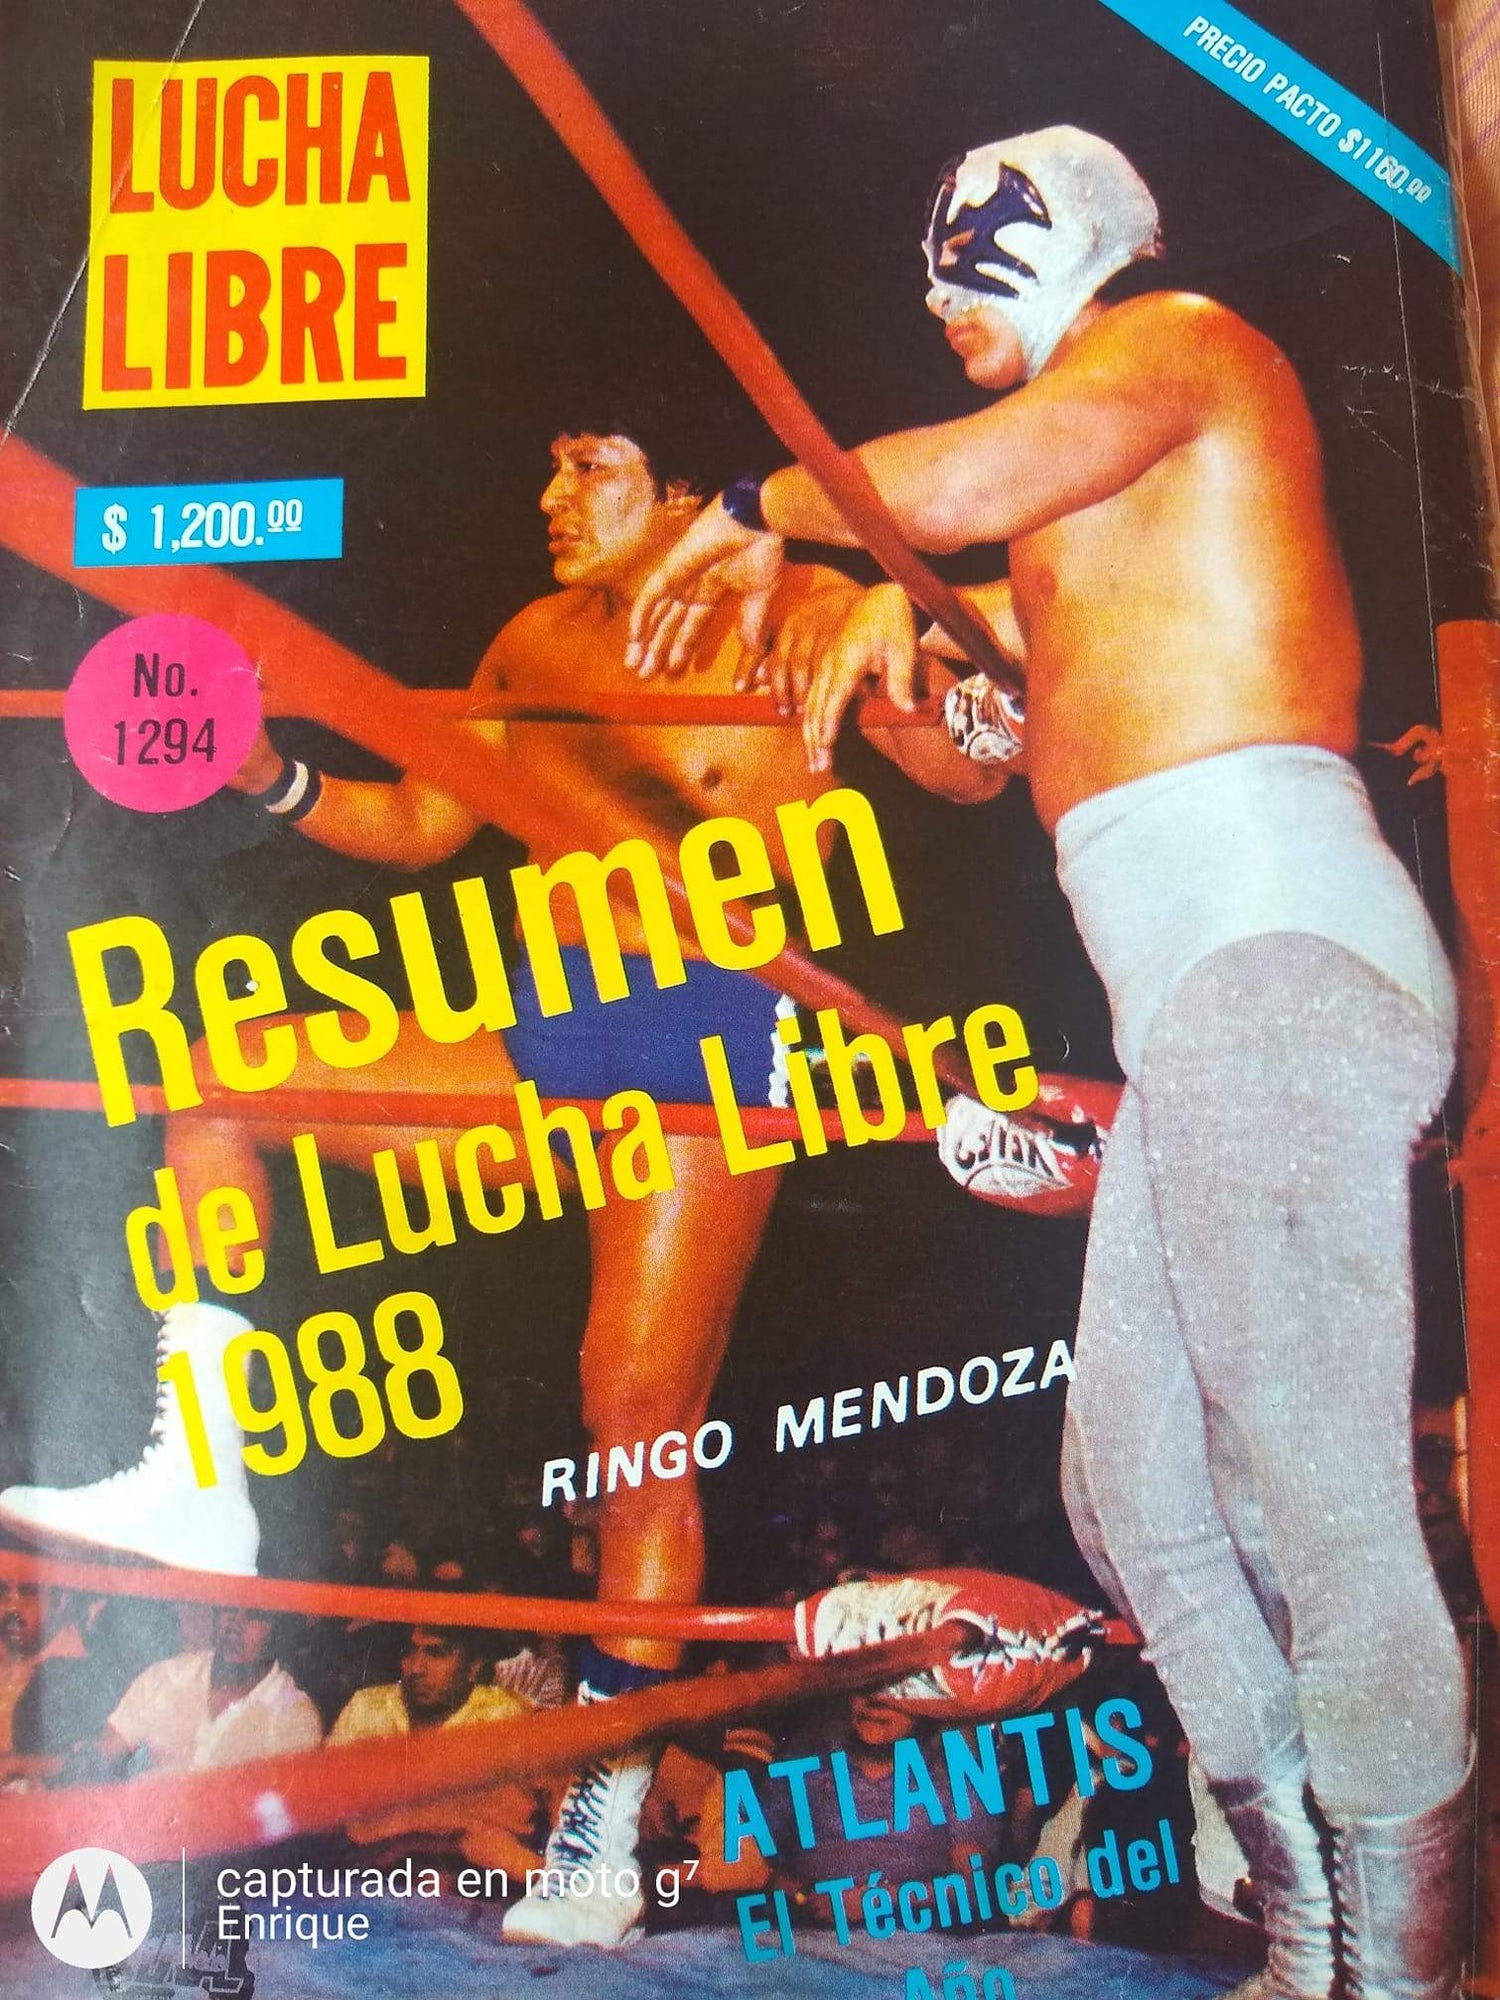 Lucha Libre Volume 1294